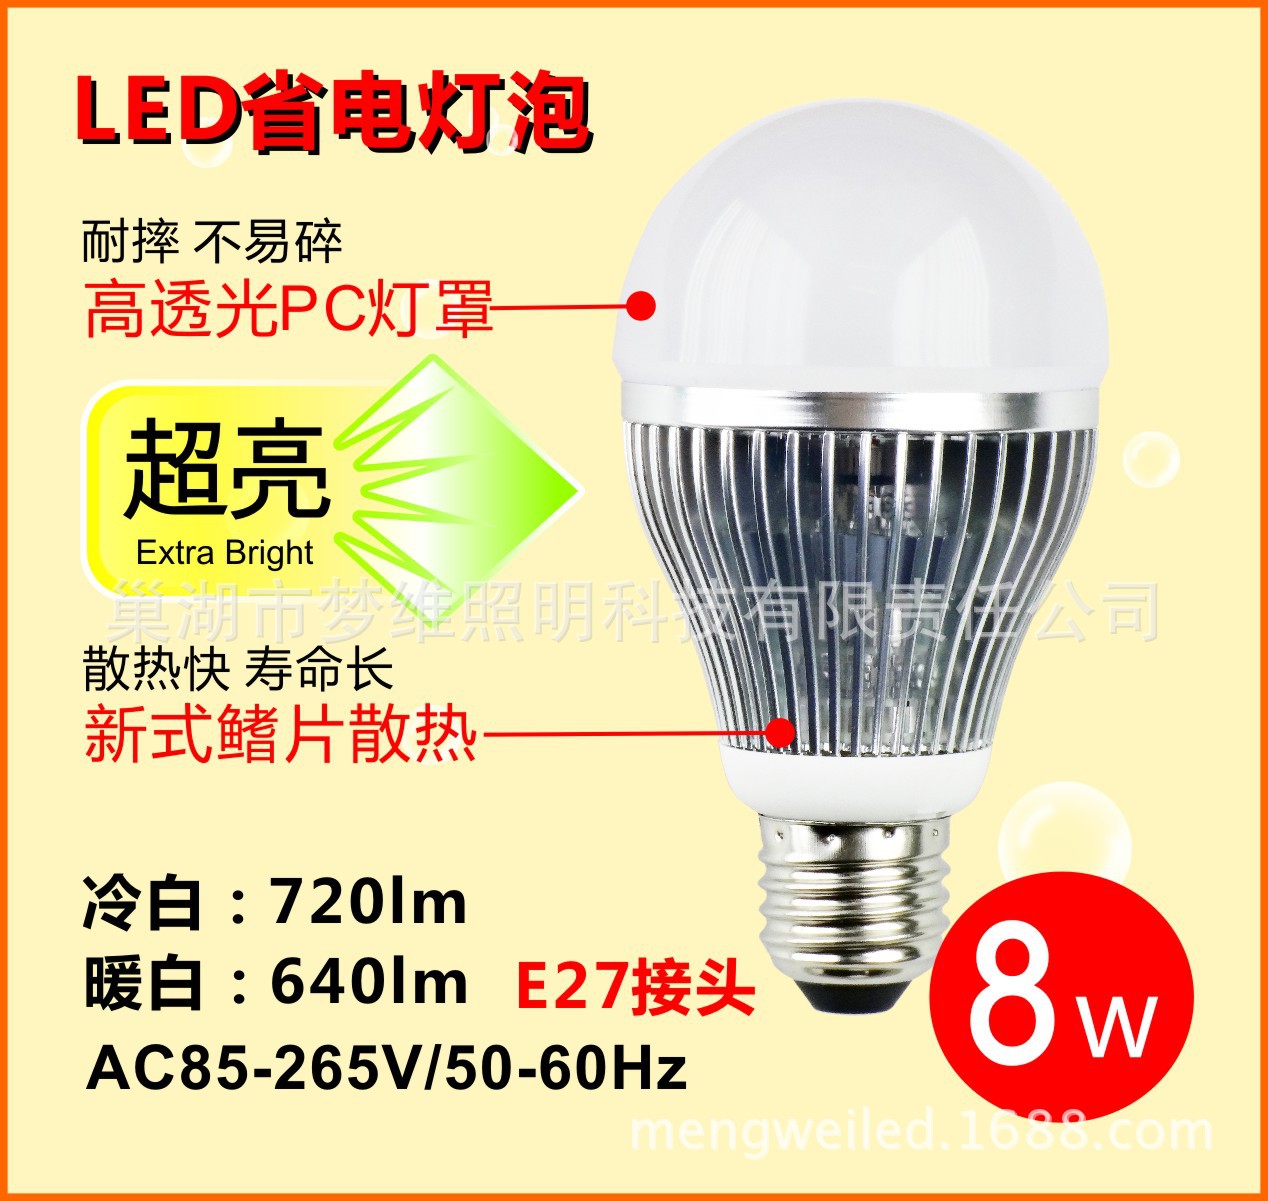 LED球泡灯 光通量720Lm 节能环保|一淘